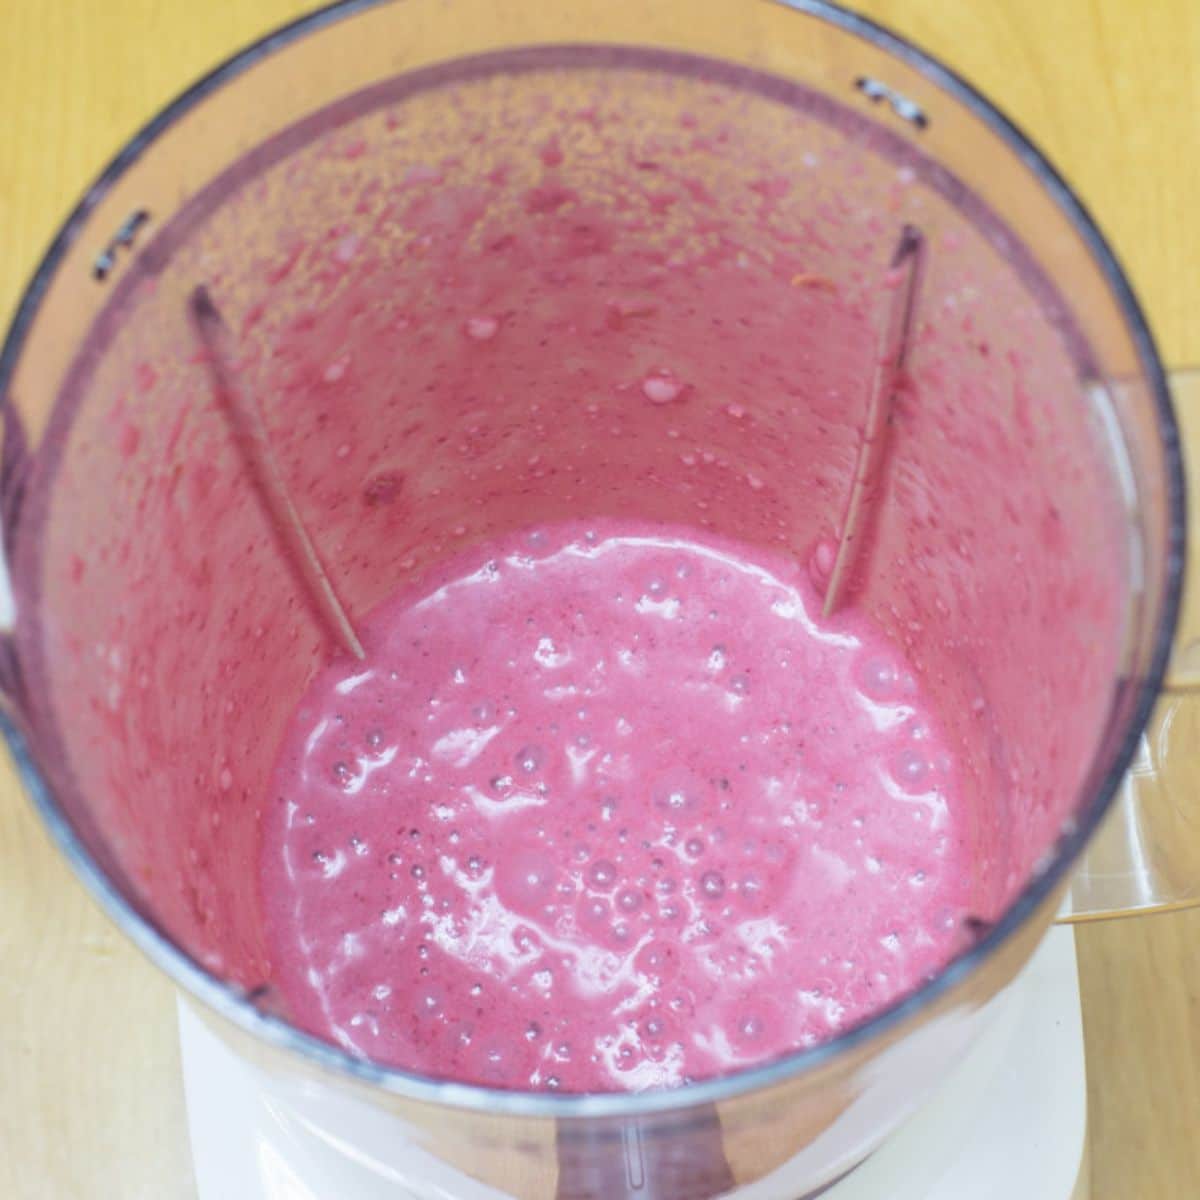 blended bright pink mixture in the blender jar.